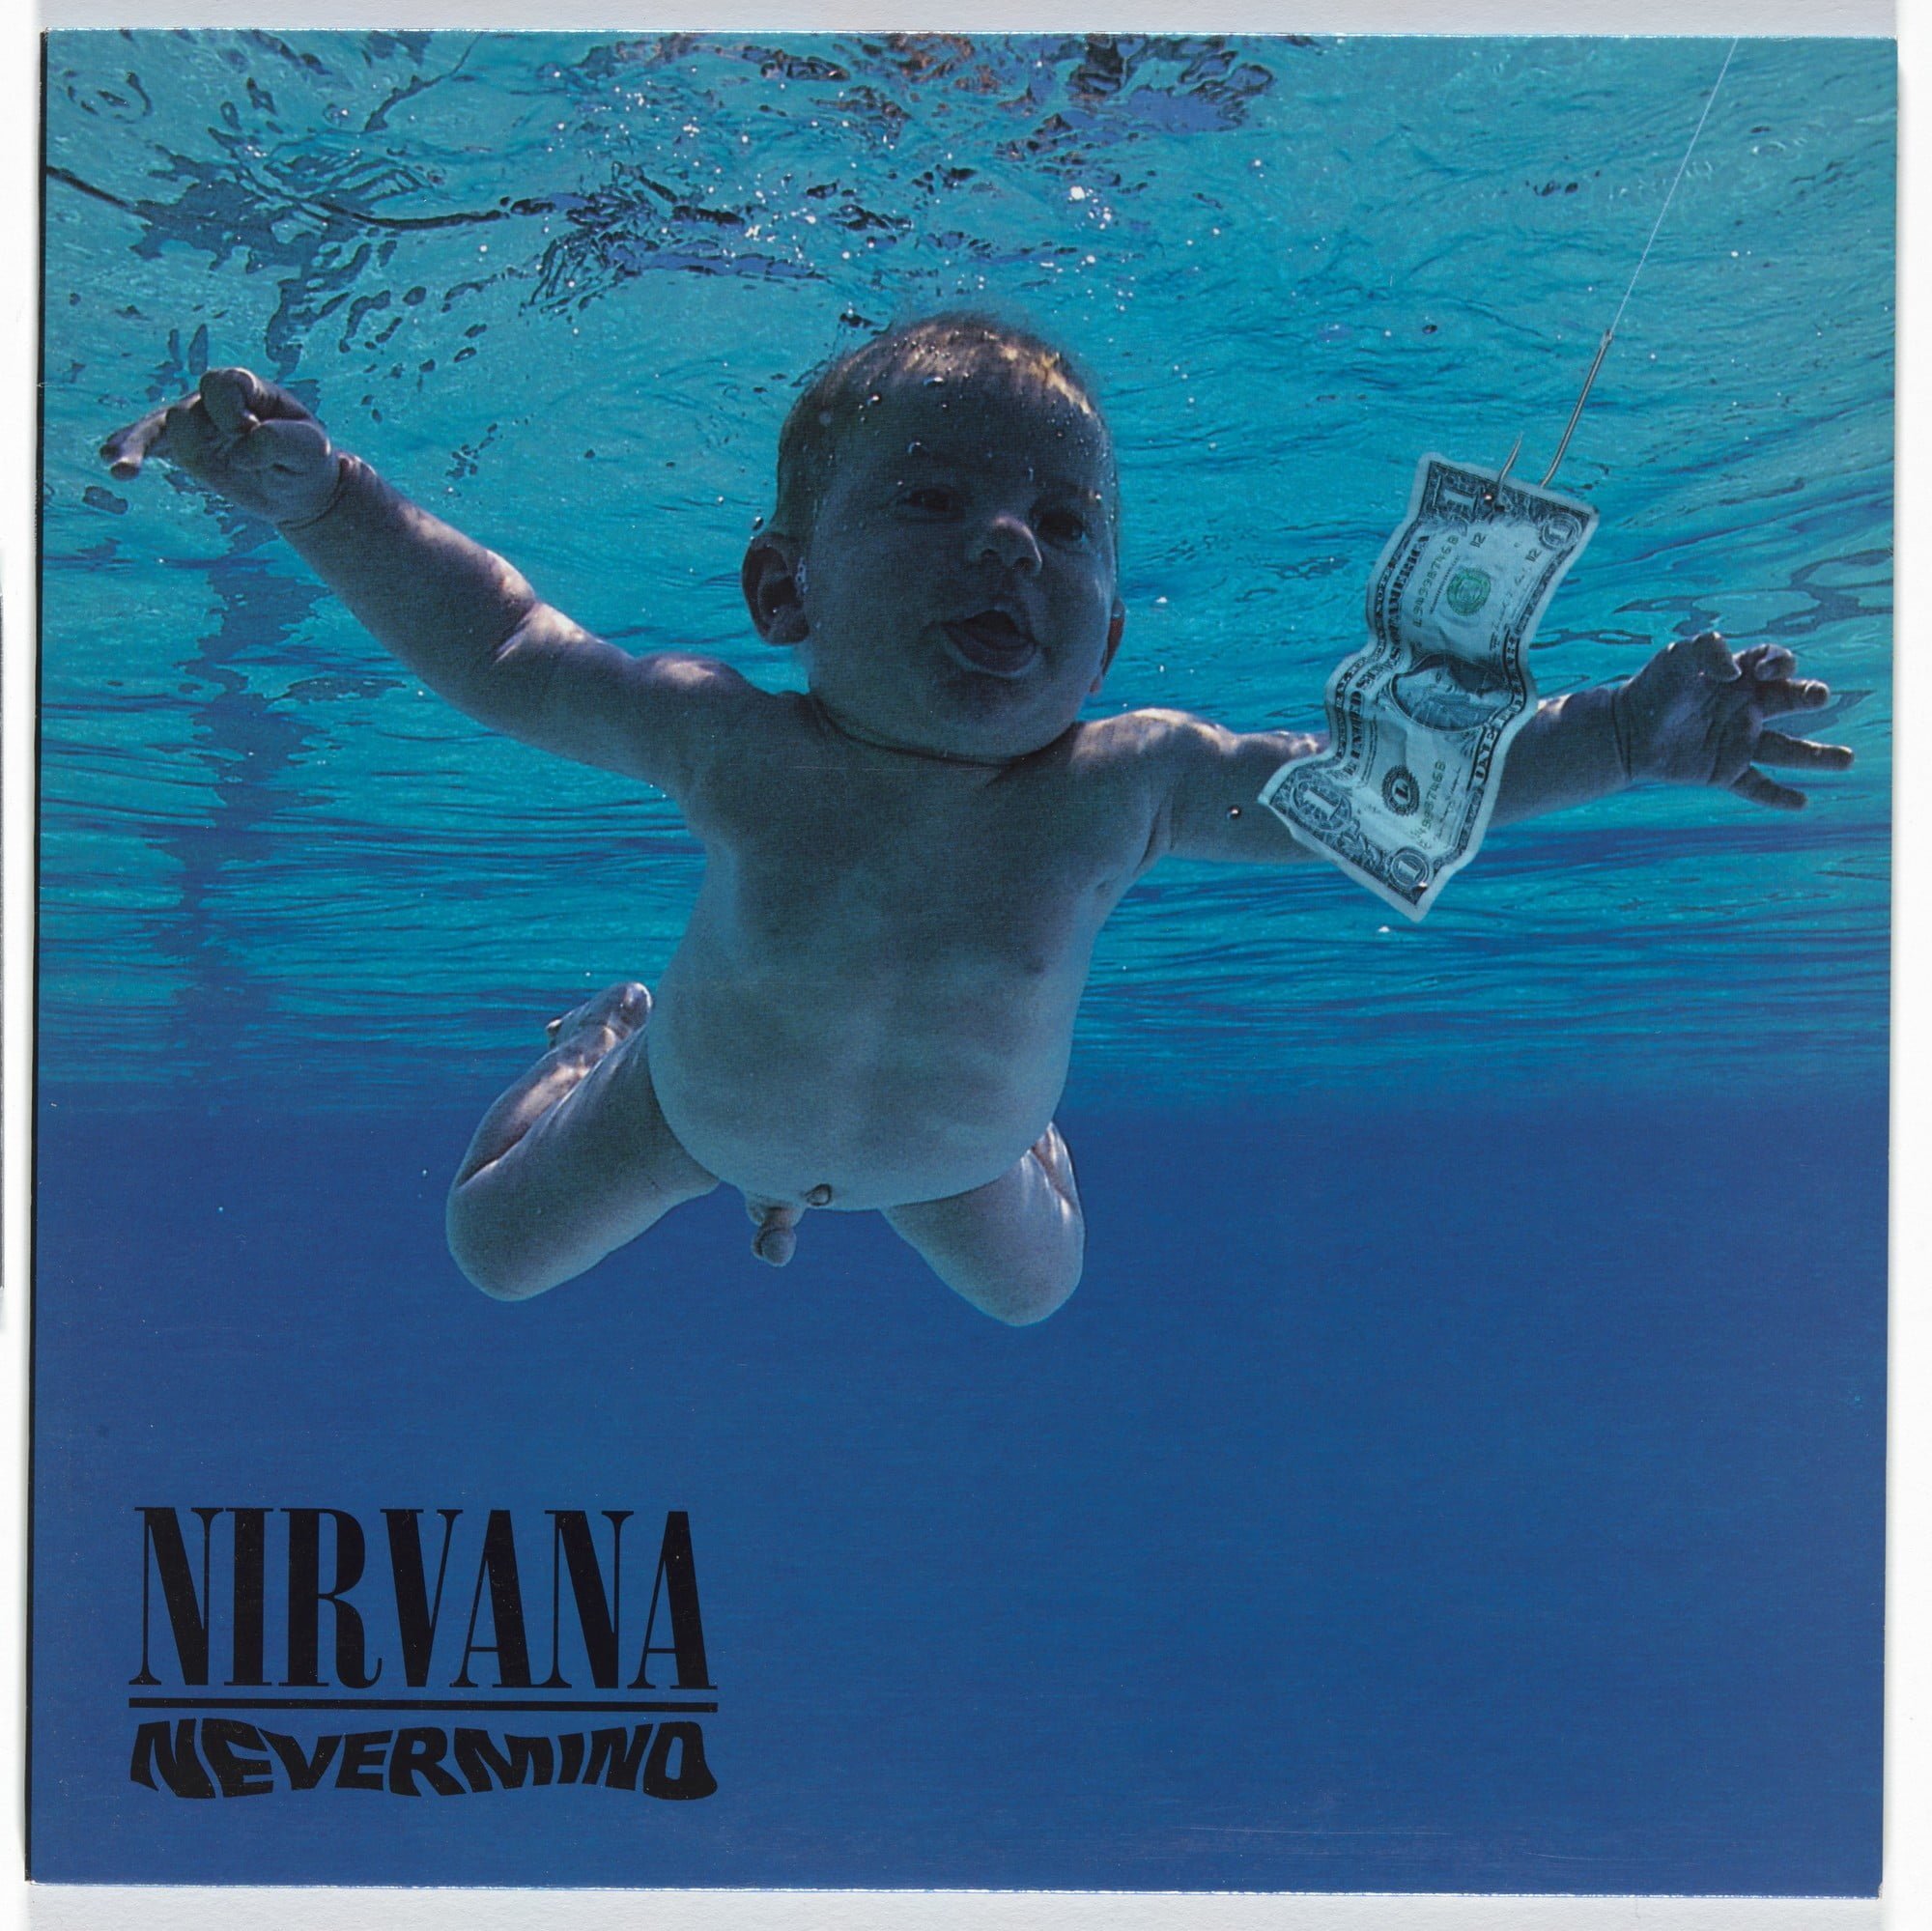 Nirvana NeverMind